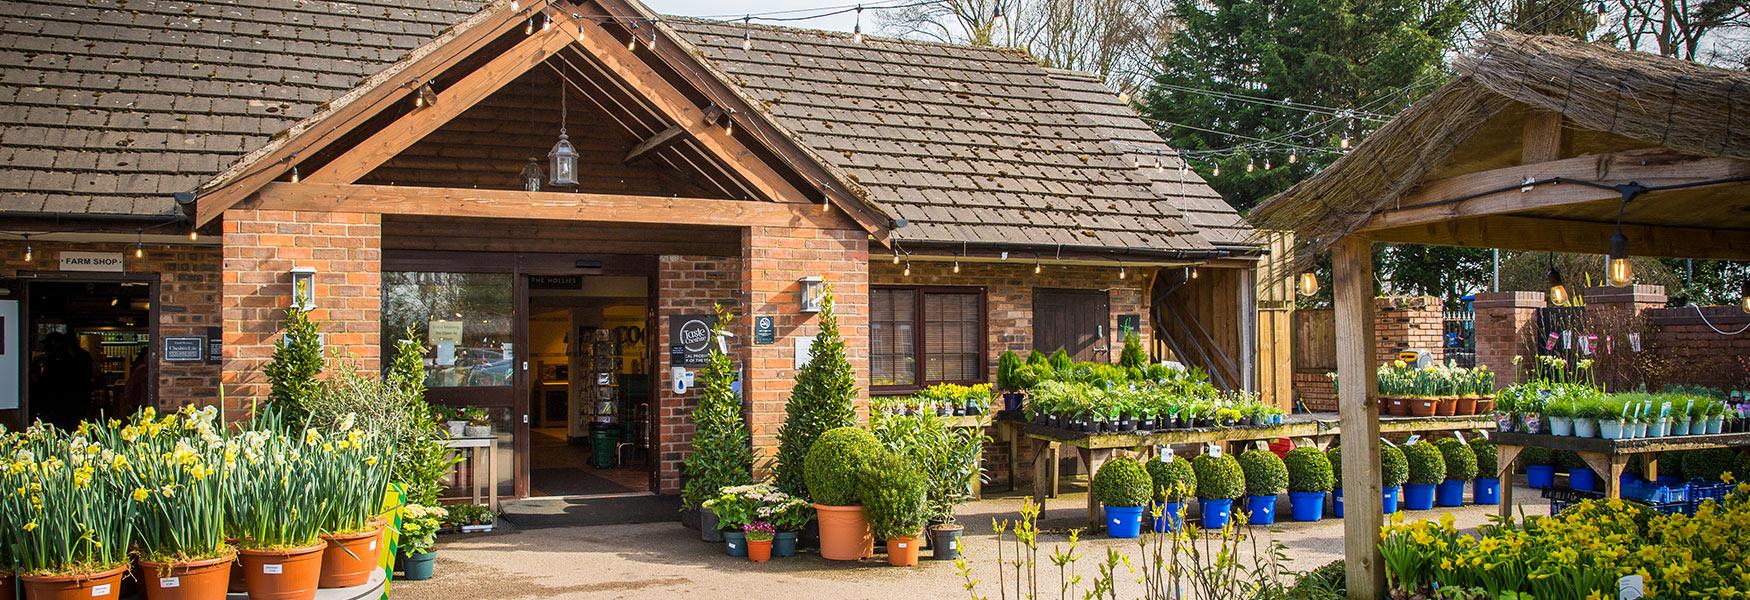 The Hollies Farm Shop - Little Budworth